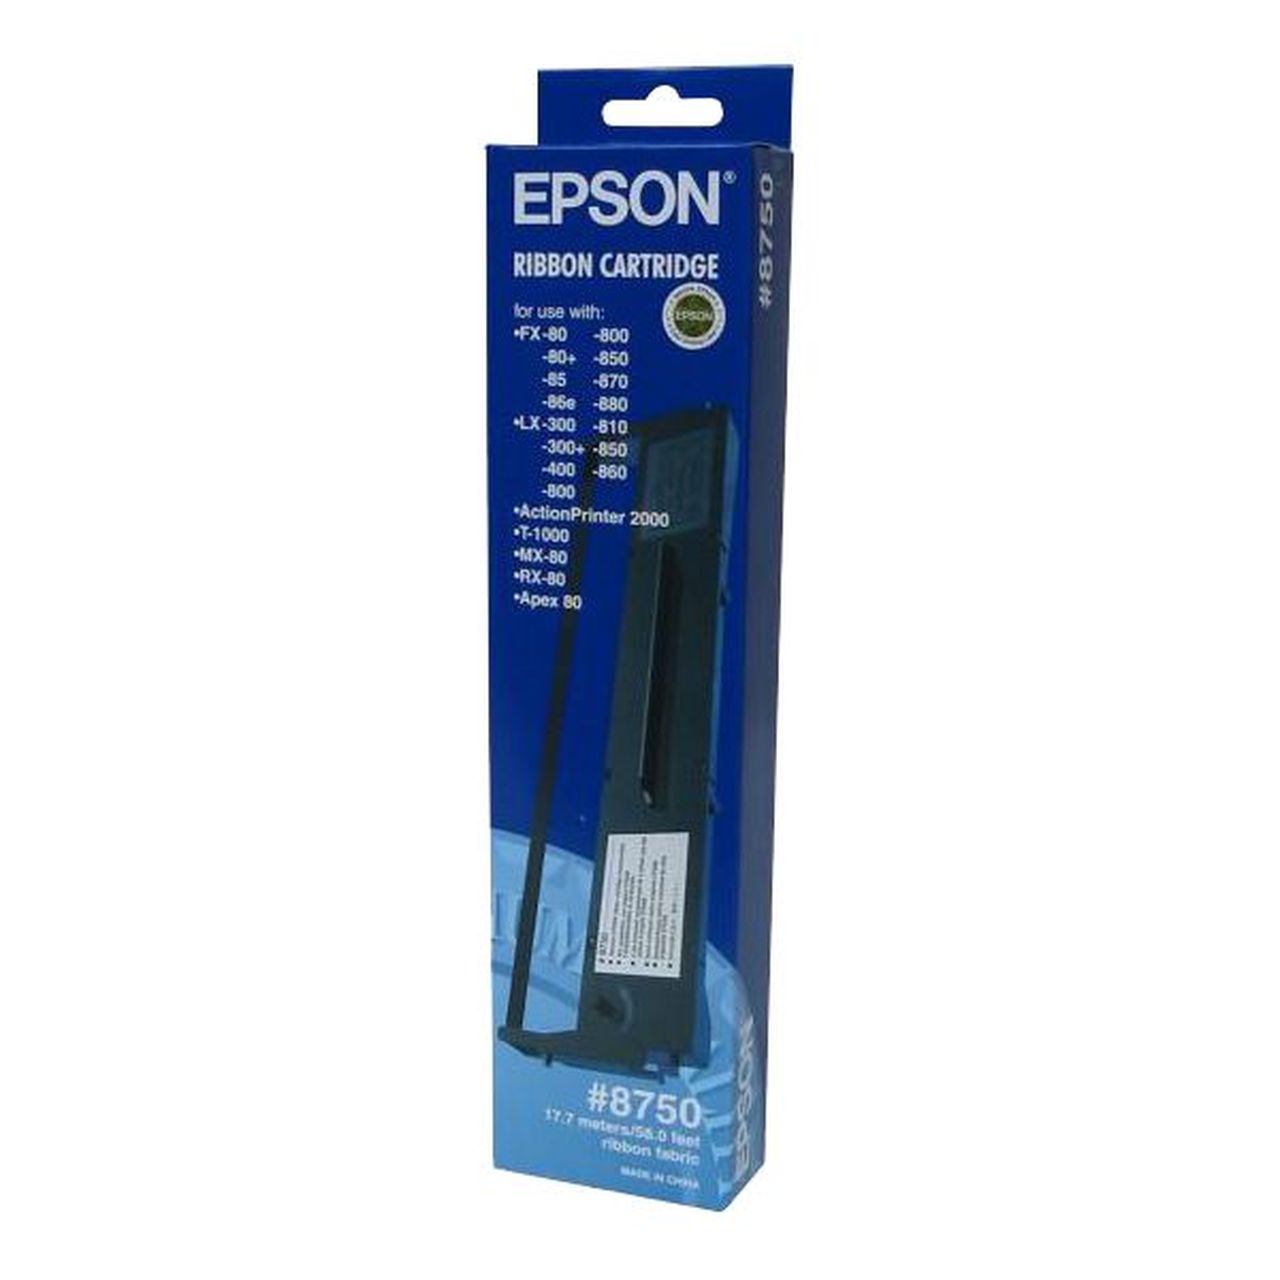 EPSON Black Fabric Ribbon Cartridge (8750) (4667815985237)